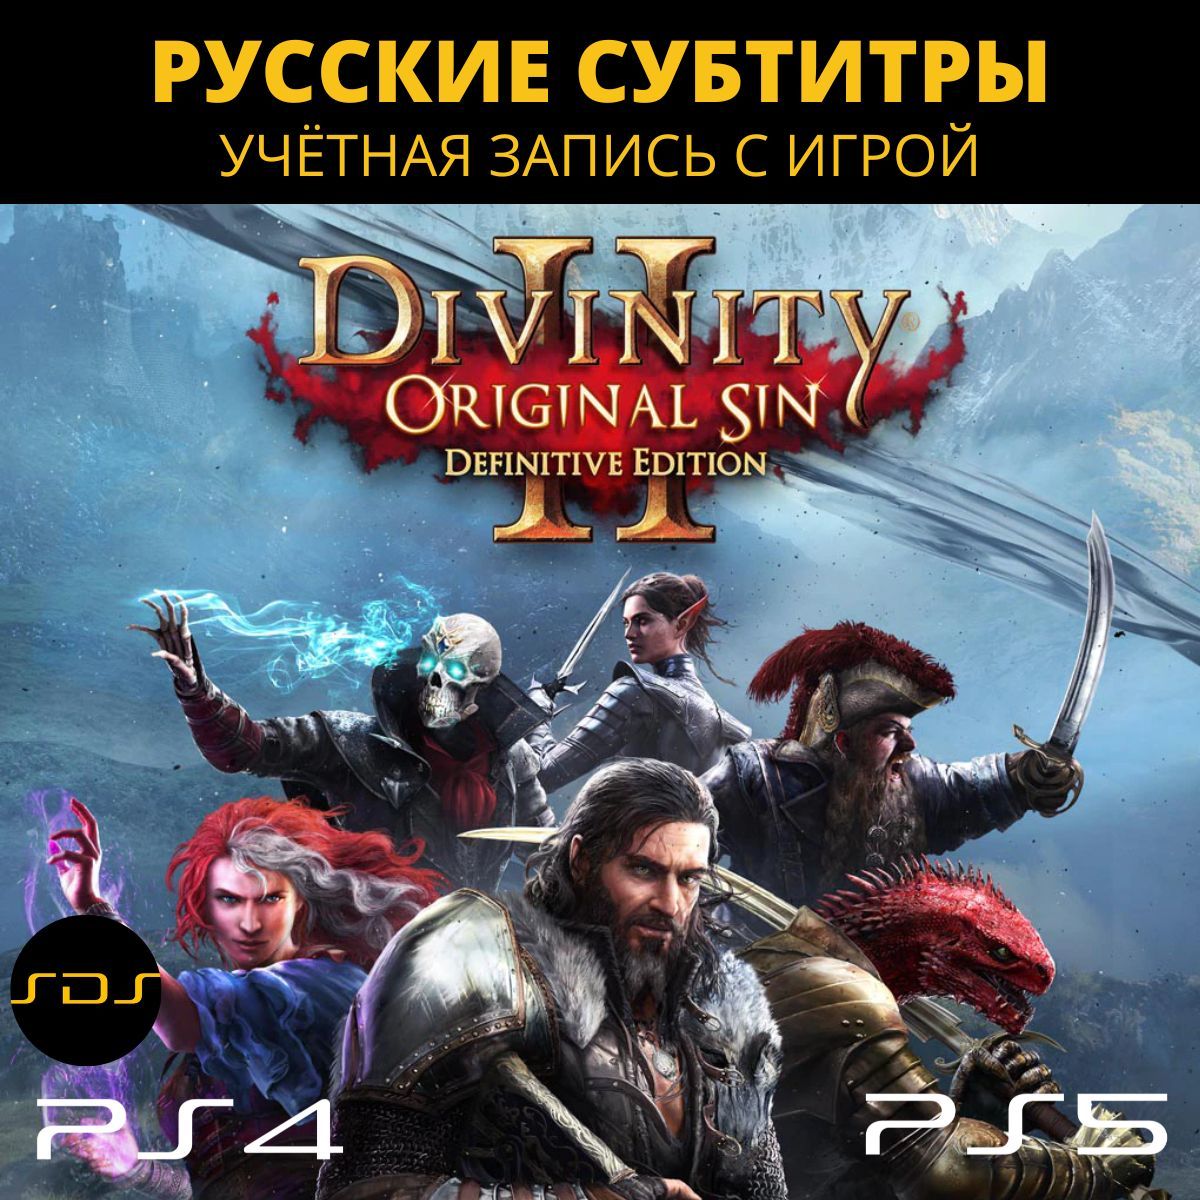 Divinity original sin definitive edition